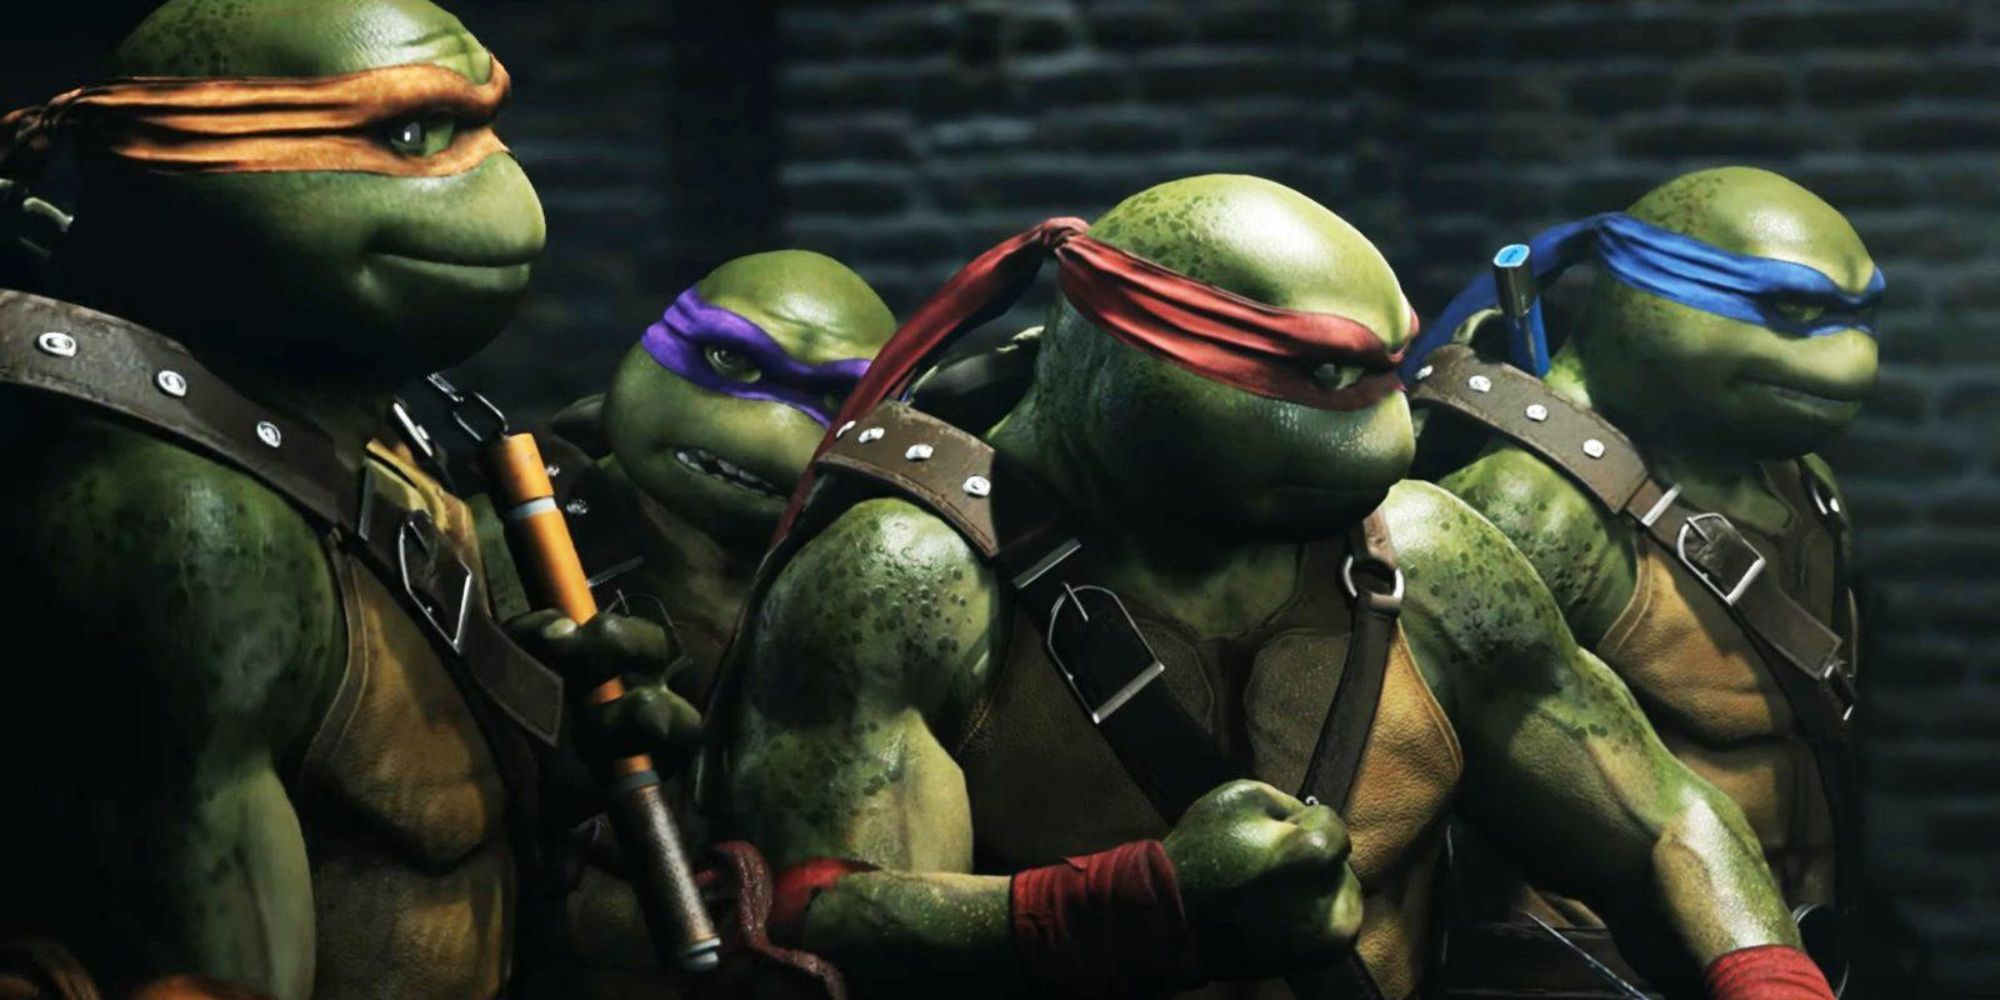 The Teenage Mutant Ninja Turtles prepare for battle in an alley